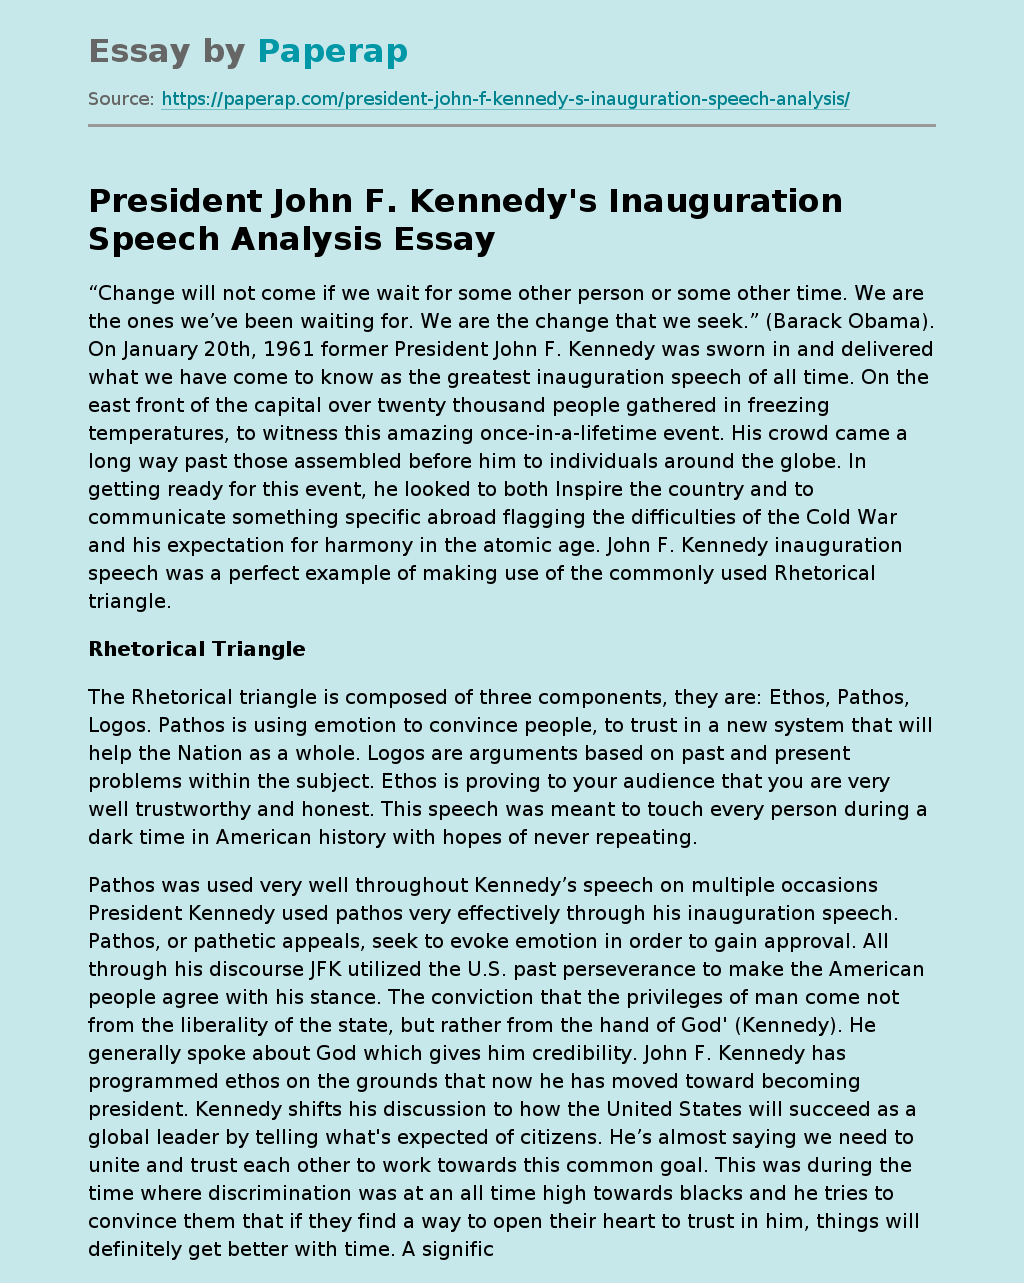 President John F. Kennedy's Inauguration Speech Analysis